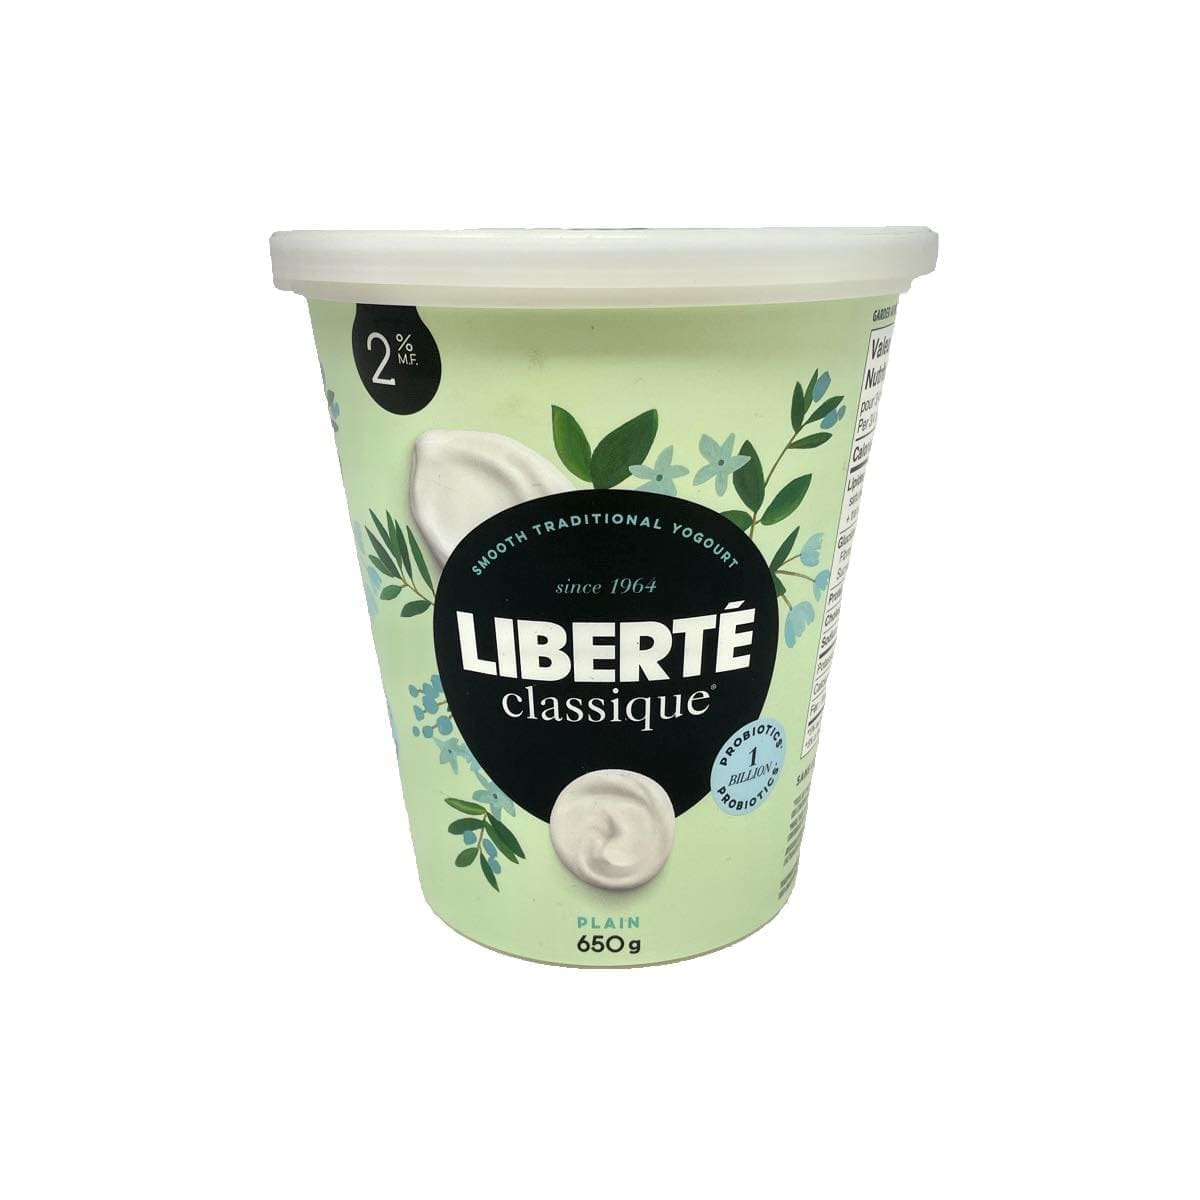 Liberte Classique Plain Yogurt 2% (650g)